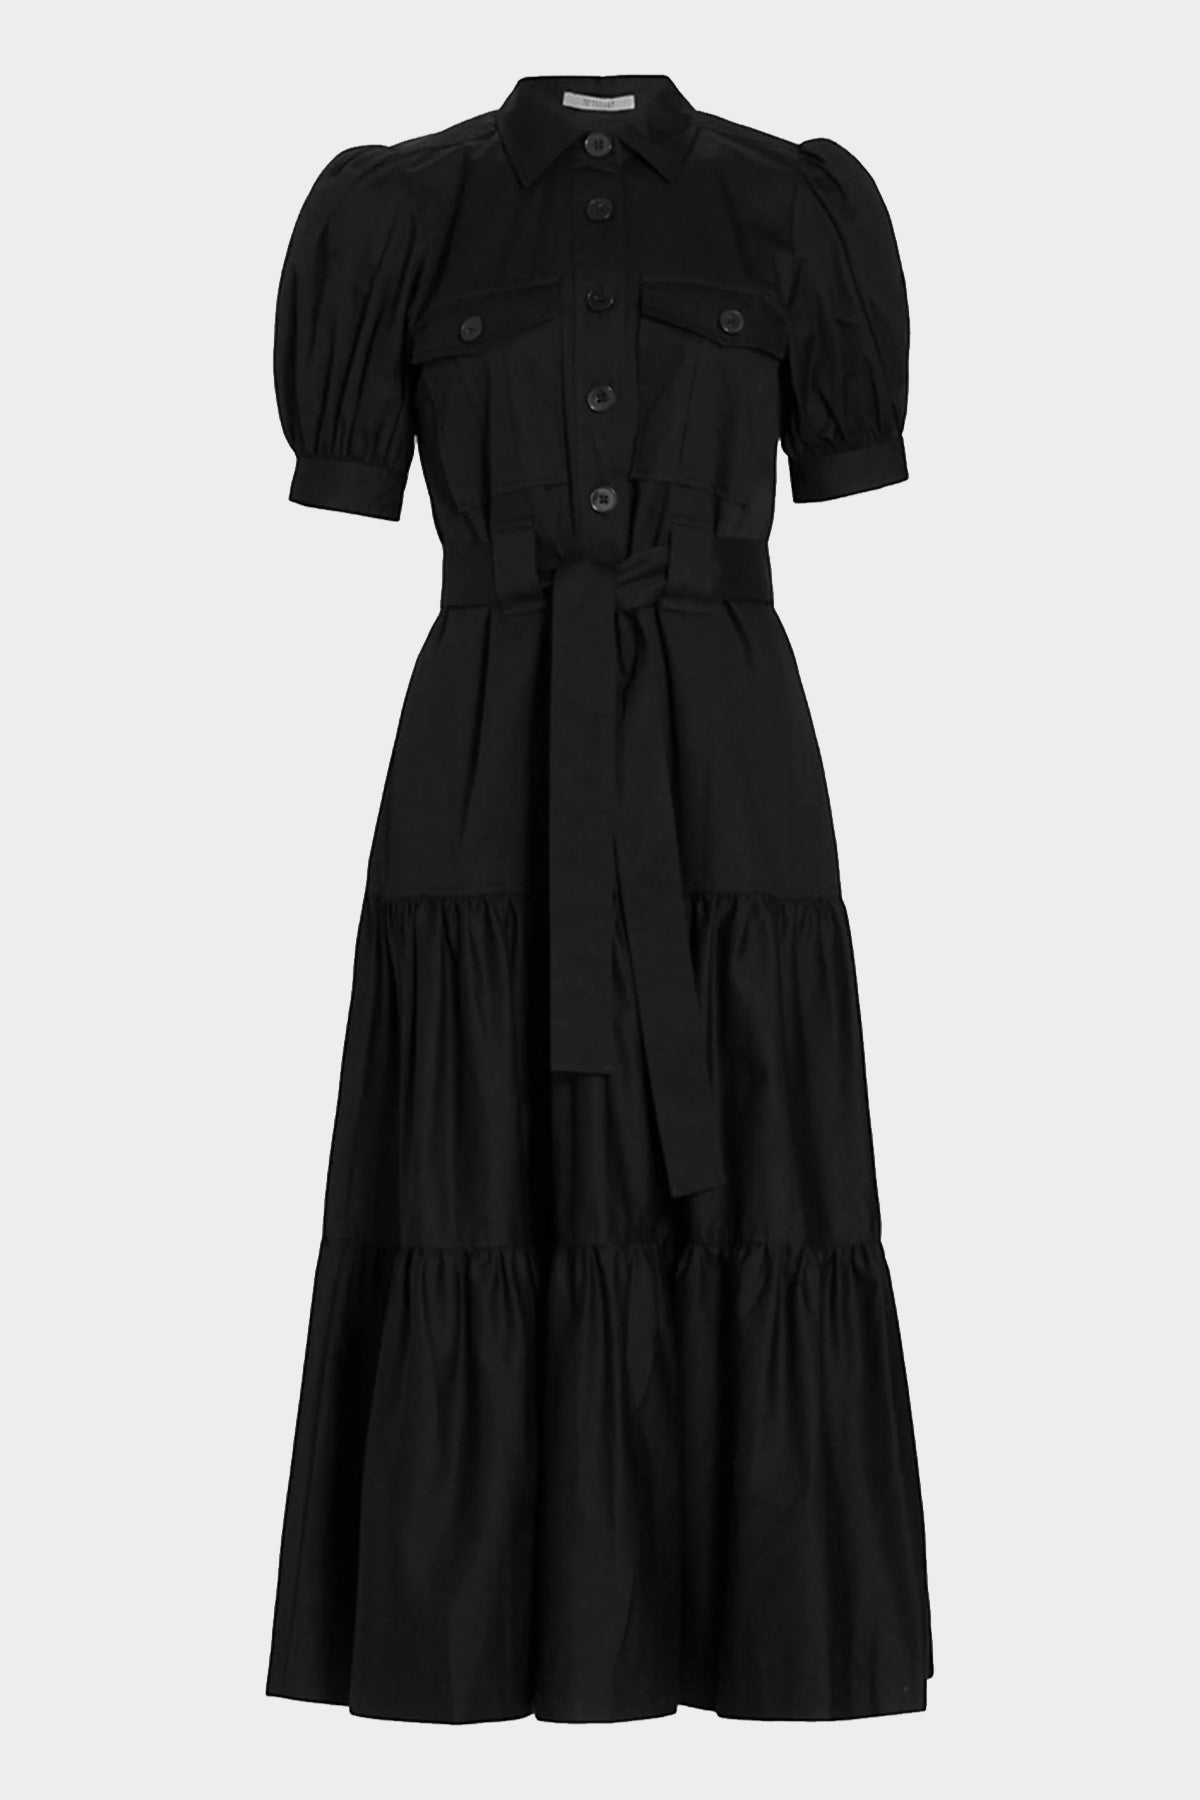 Buffy Utility Dress in Black - shop-olivia.com